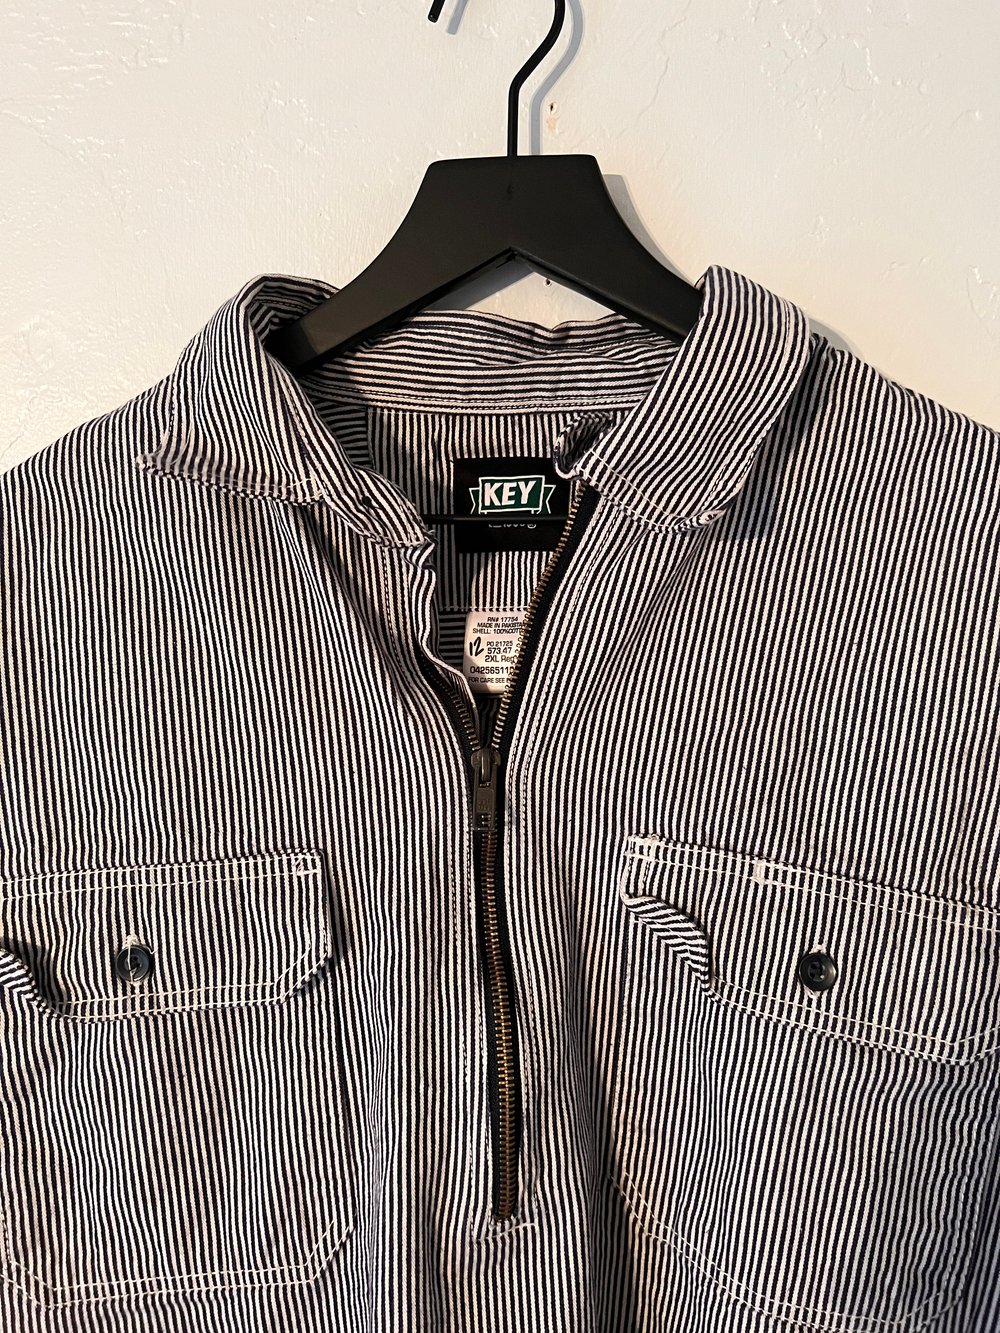 Key Hickory Stripe Long Sleeve Work Shirt (XXL)